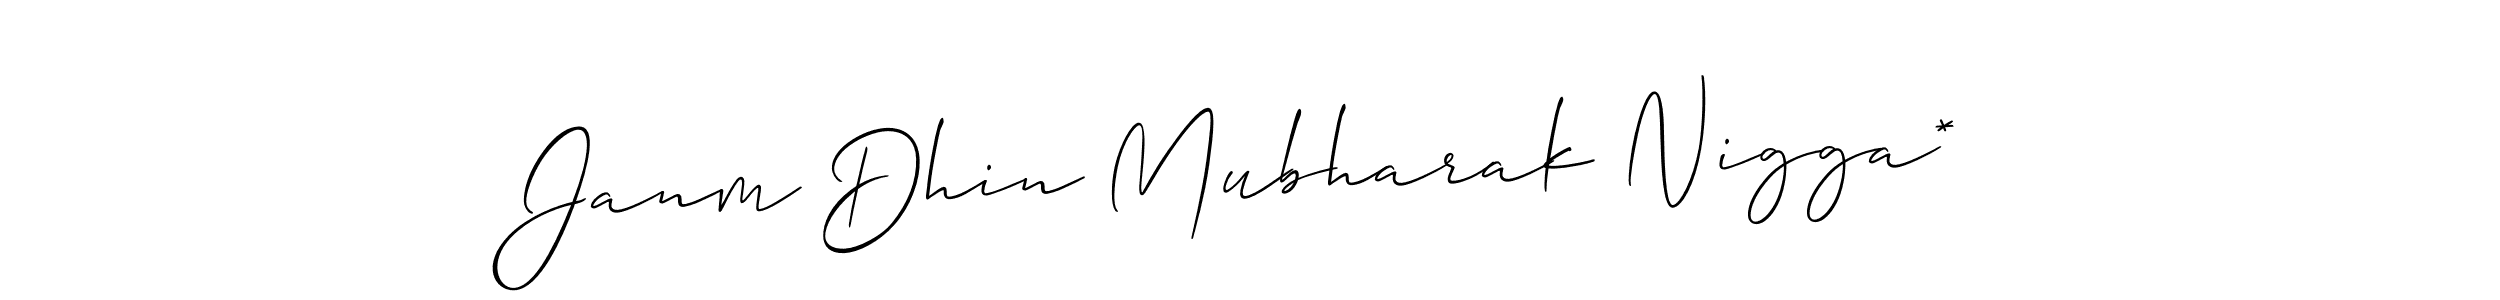 How to Draw Janm Dhin Mubharak Nigga* signature style? Allison_Script is a latest design signature styles for name Janm Dhin Mubharak Nigga*. Janm Dhin Mubharak Nigga* signature style 2 images and pictures png